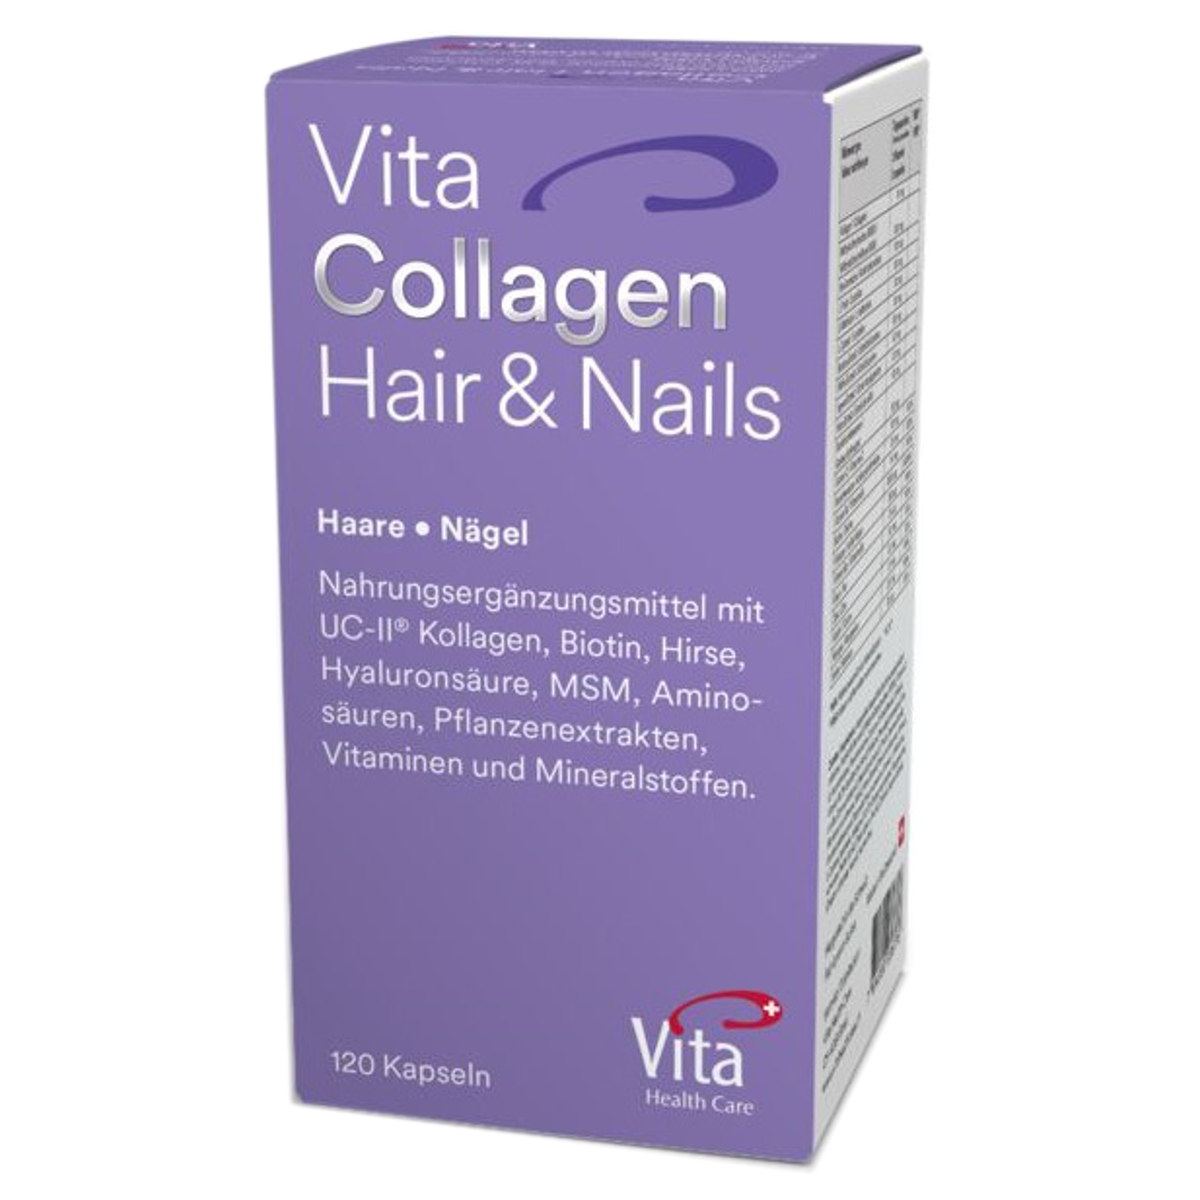 Vita Collagen Hair & Nails Kapseln Dose 120 Stück